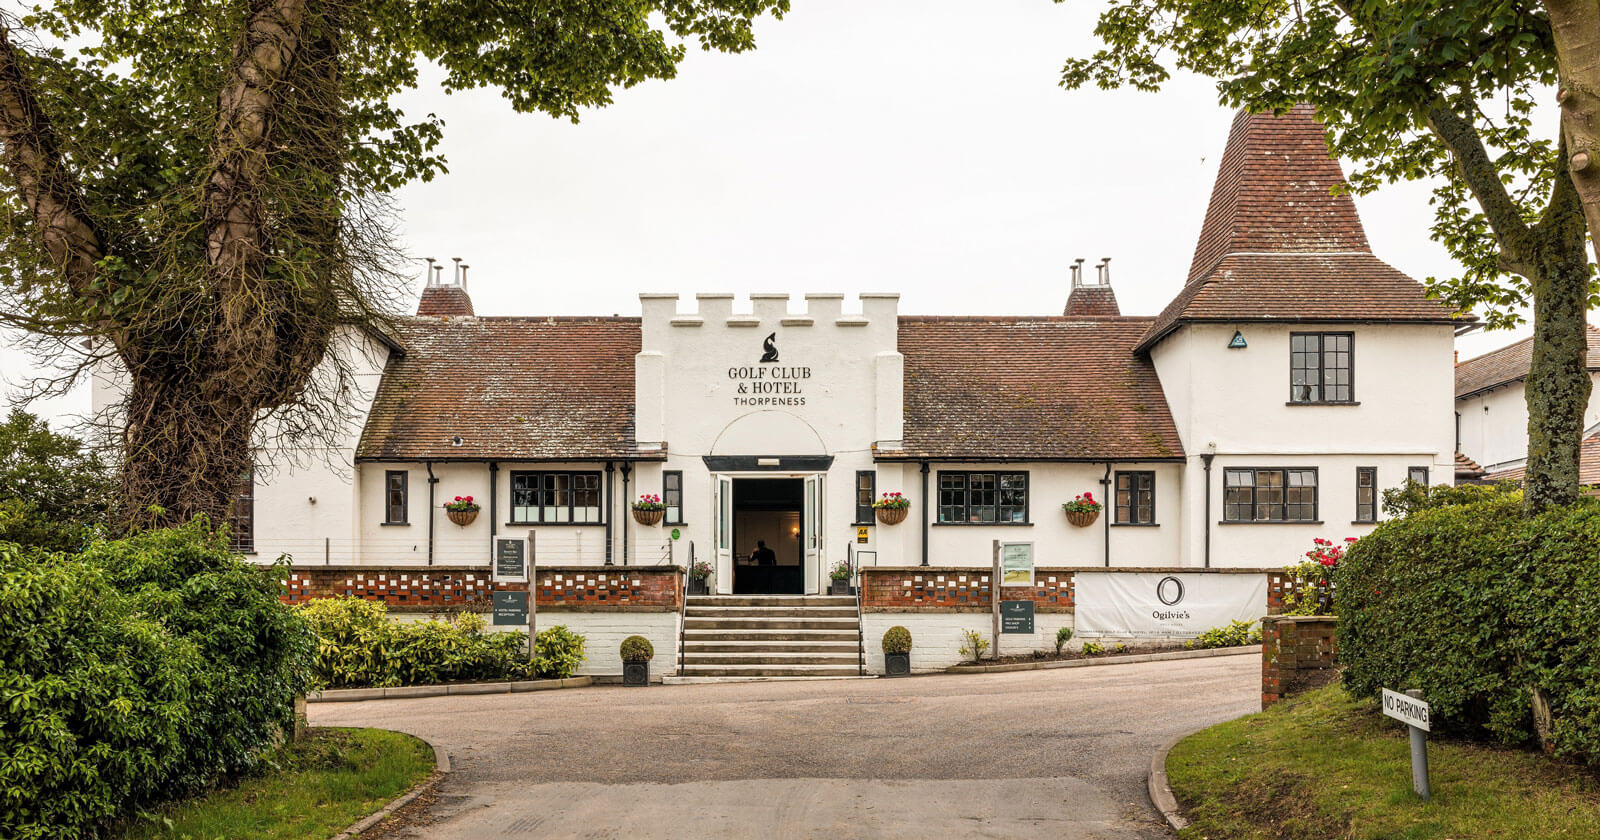 Thorpeness Golf Club and Hotel Suffolk